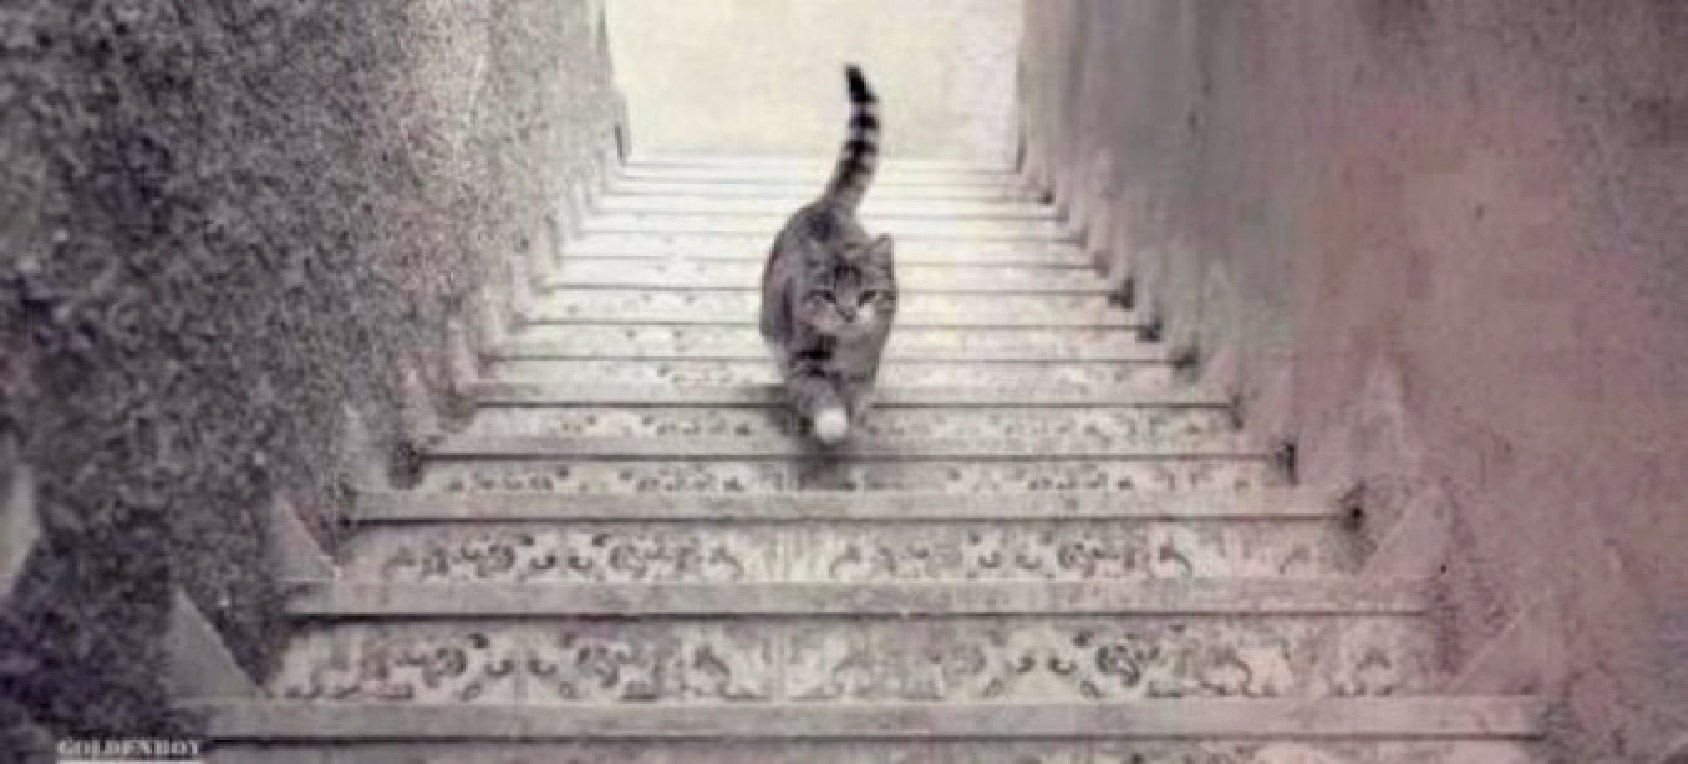 Me pareció ver un lindo gatito que… ¿sube o baja?